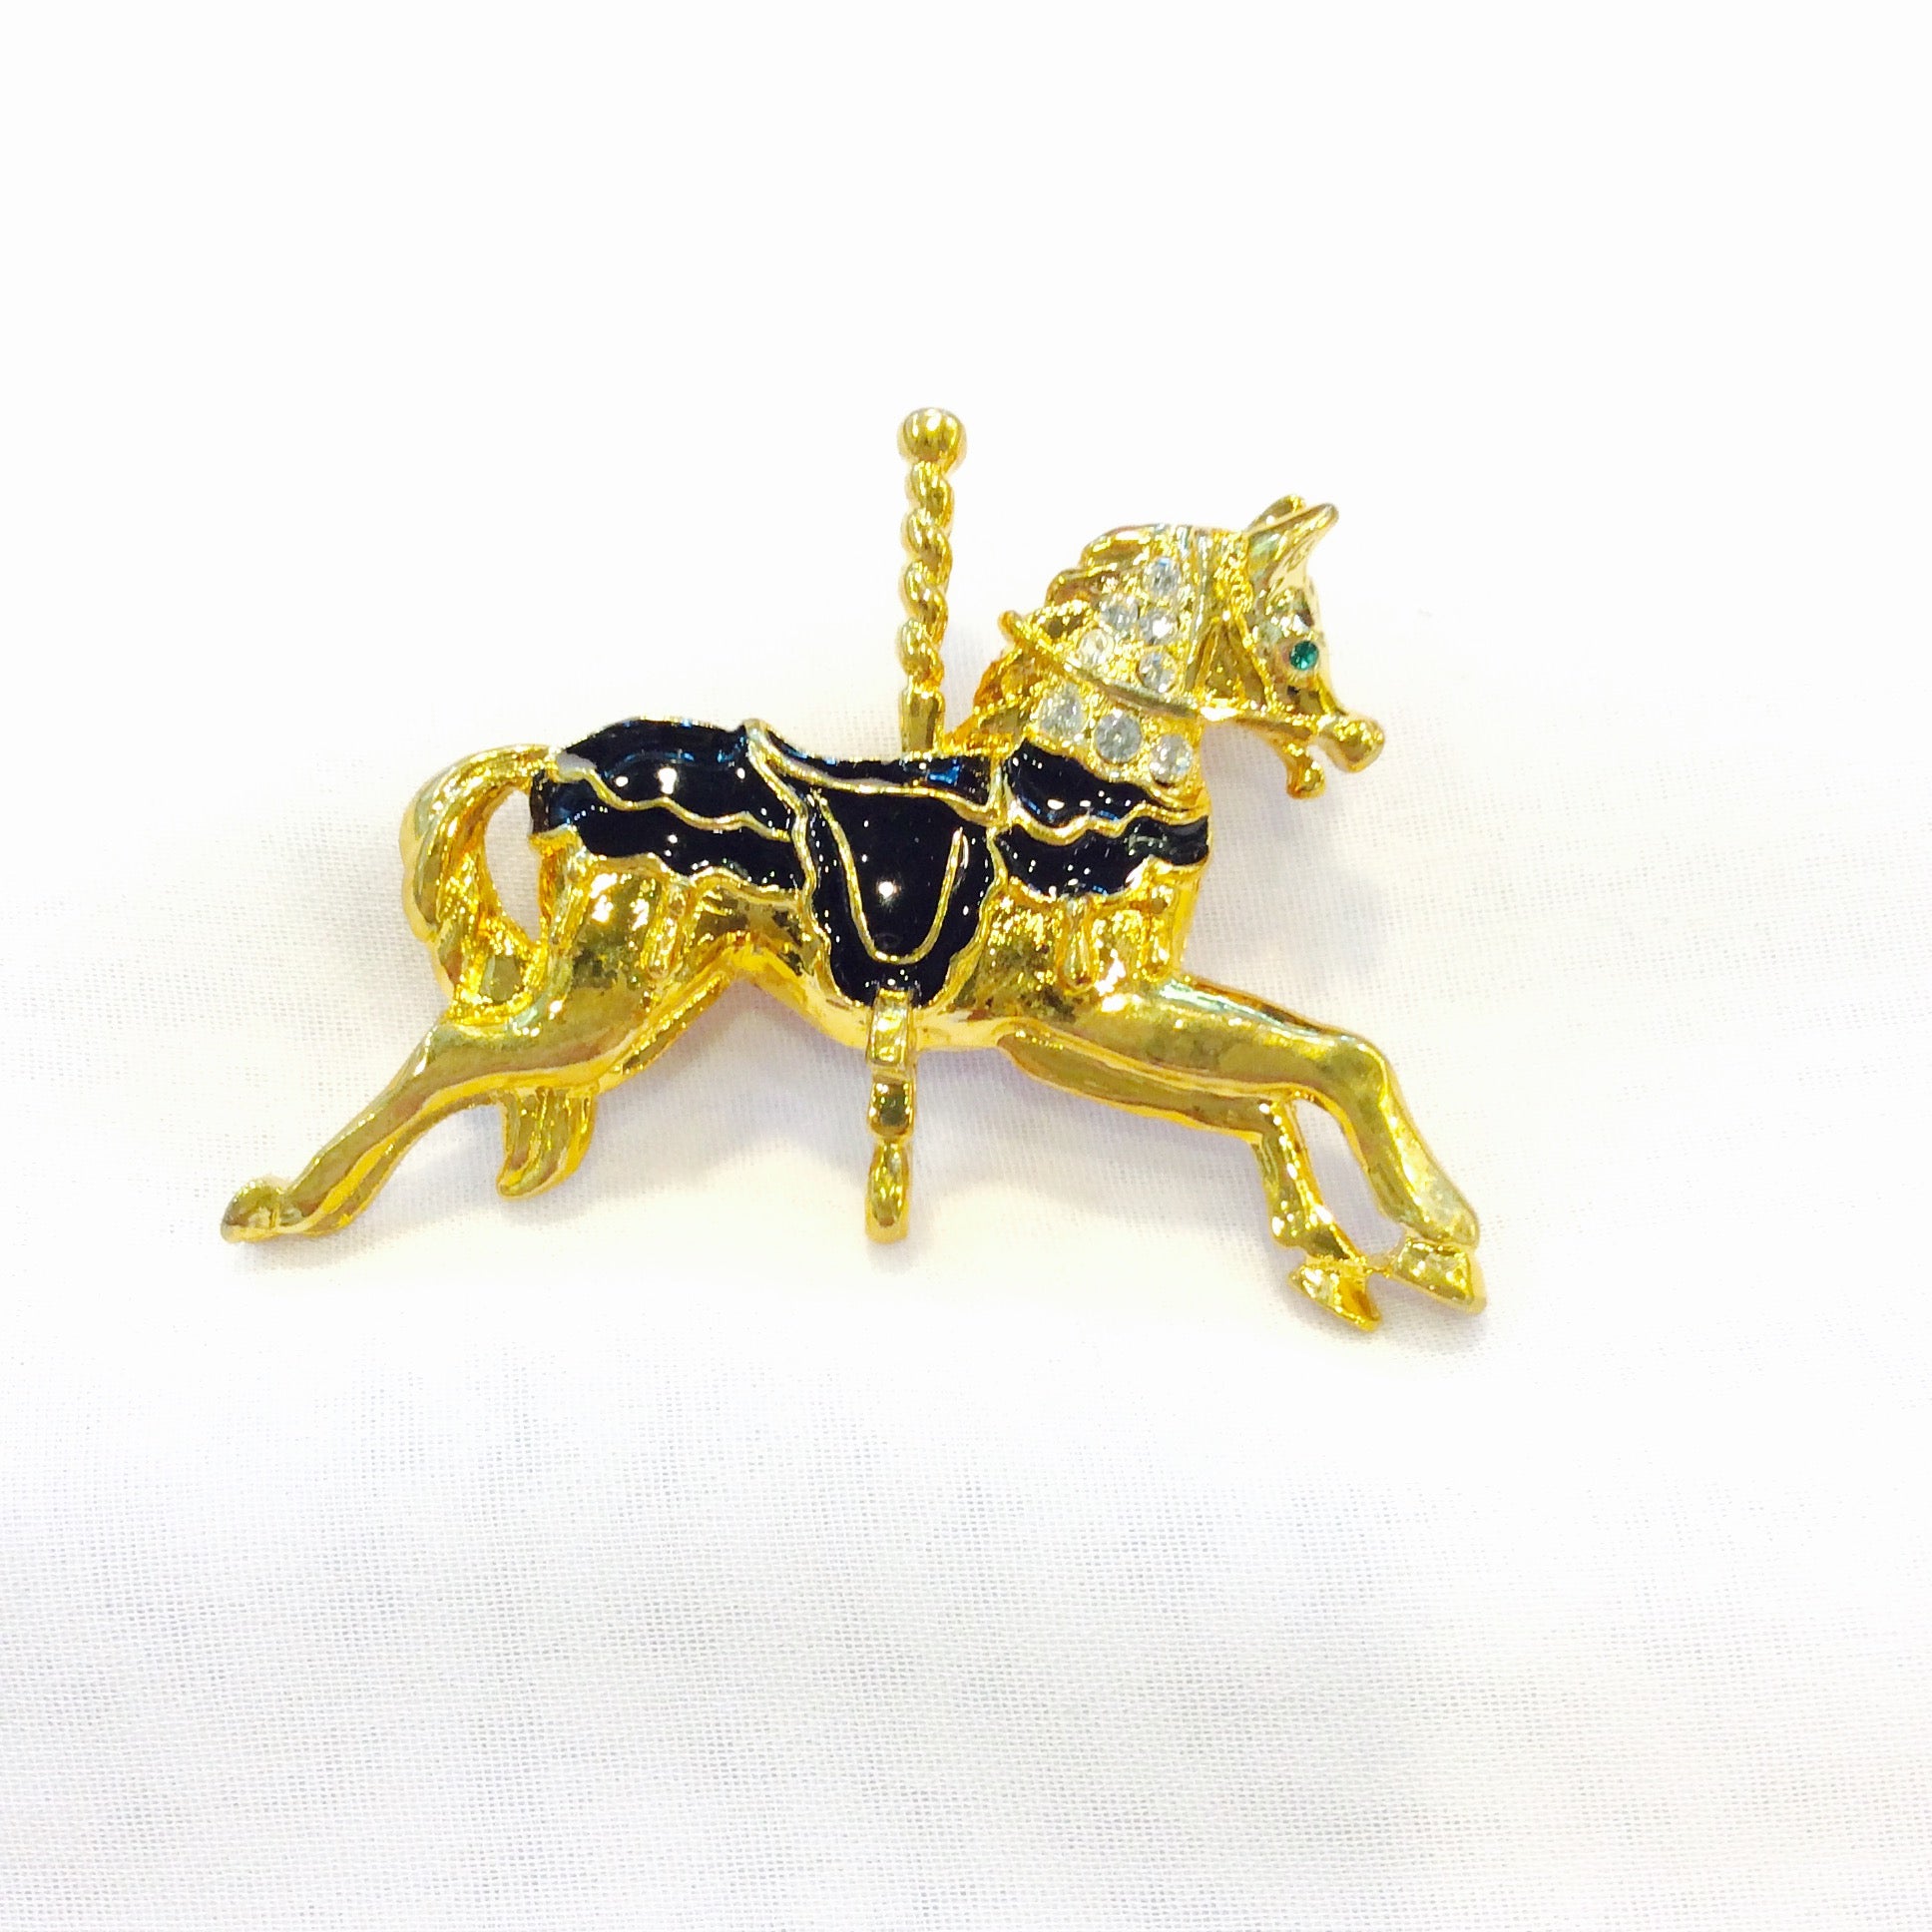 Carousel Horse Pin#19-302